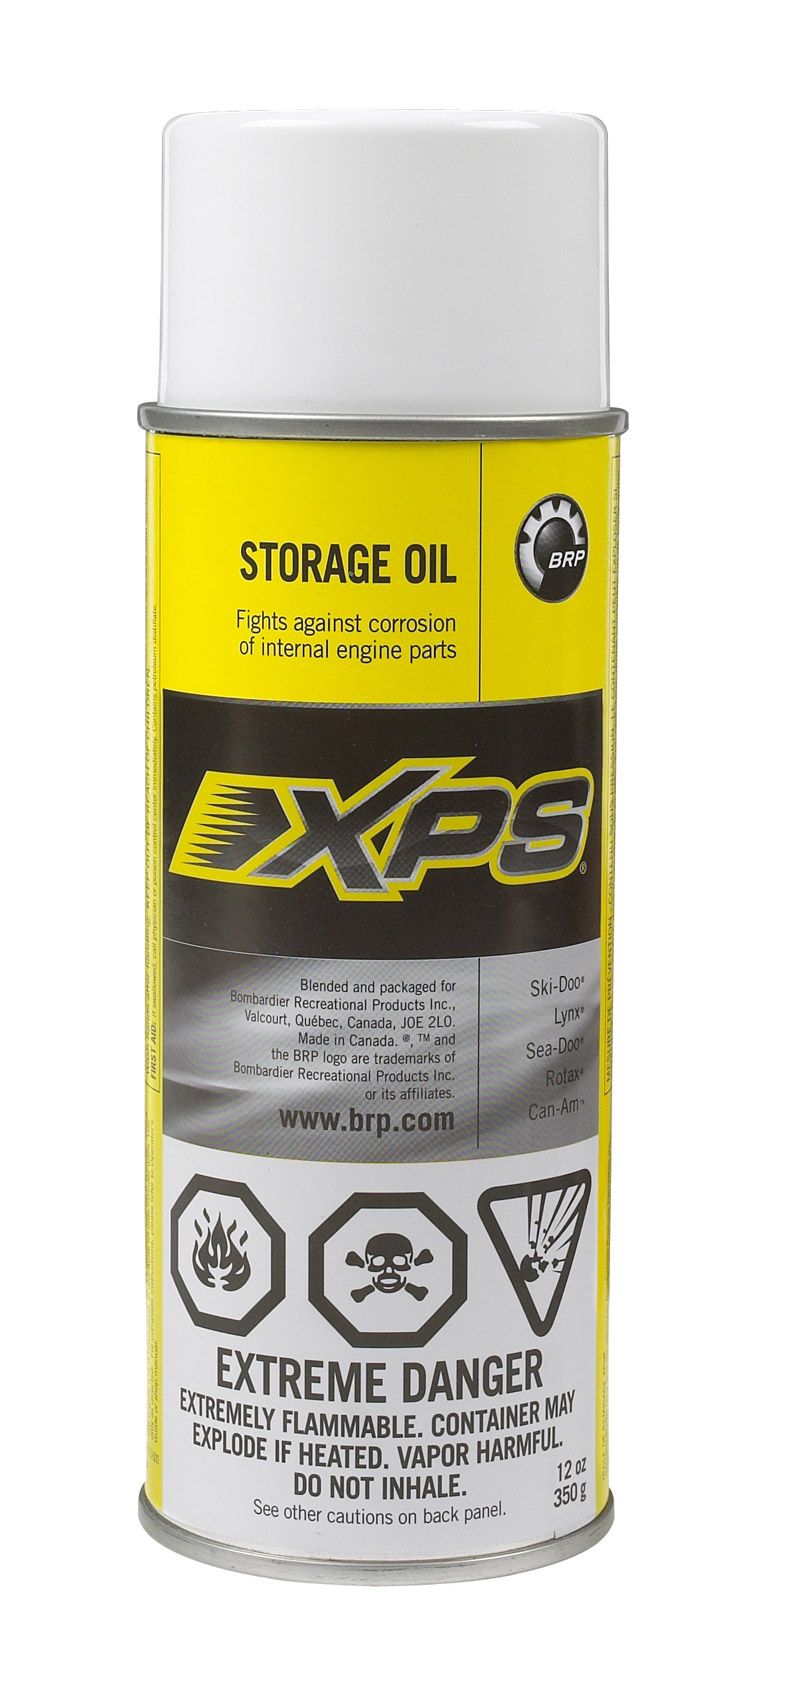 XPS STORAGE OIL